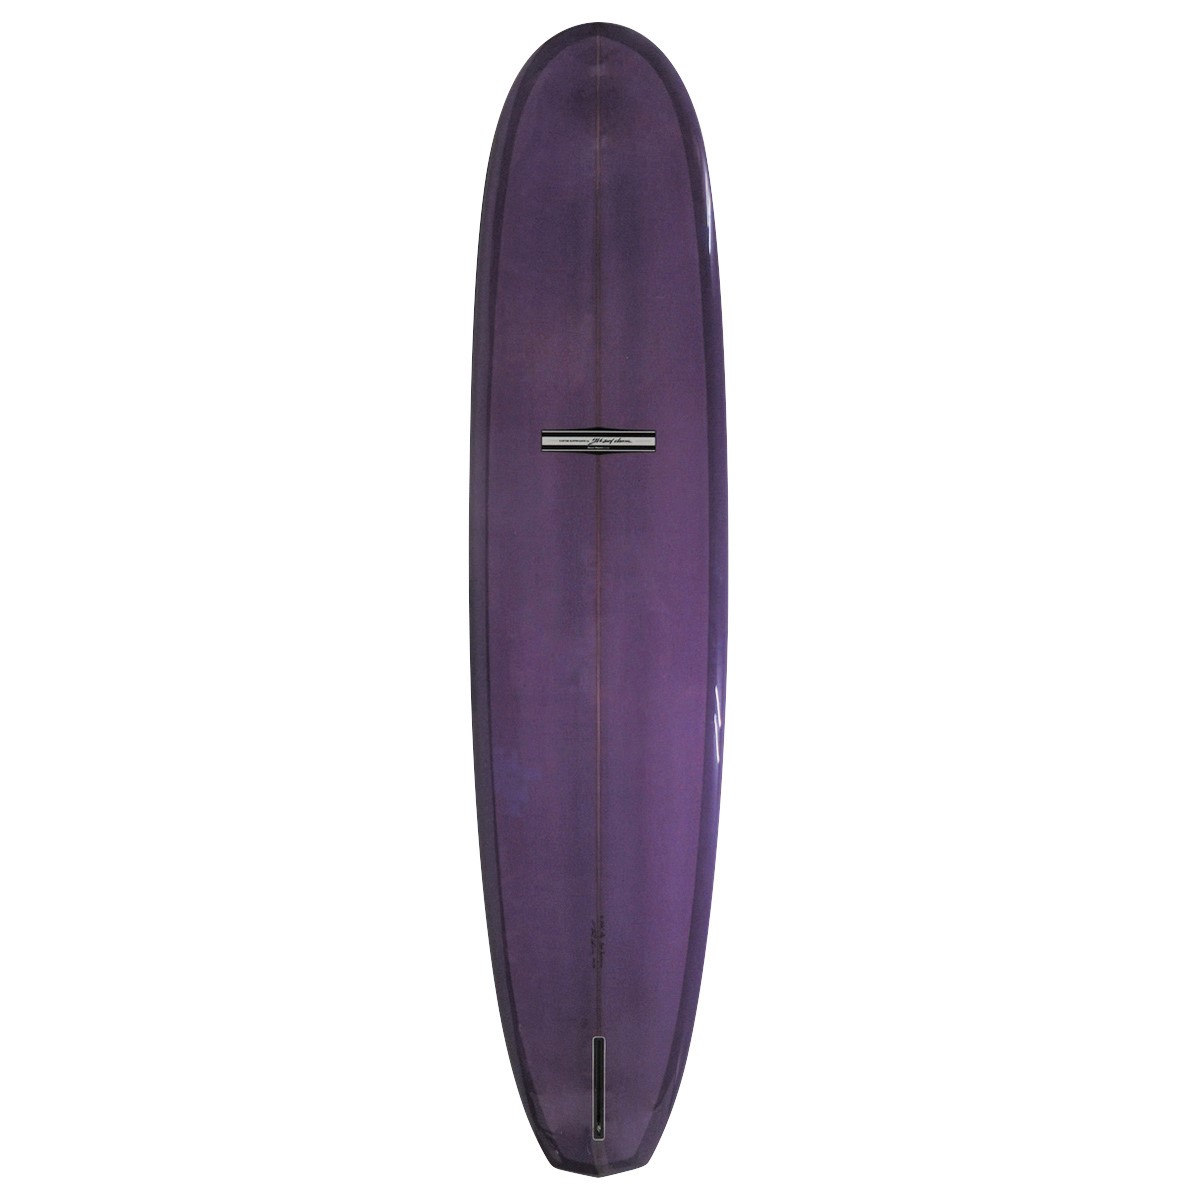 YU SURF CLASSIC / Custom Noserider 9'0 Shaped by RU